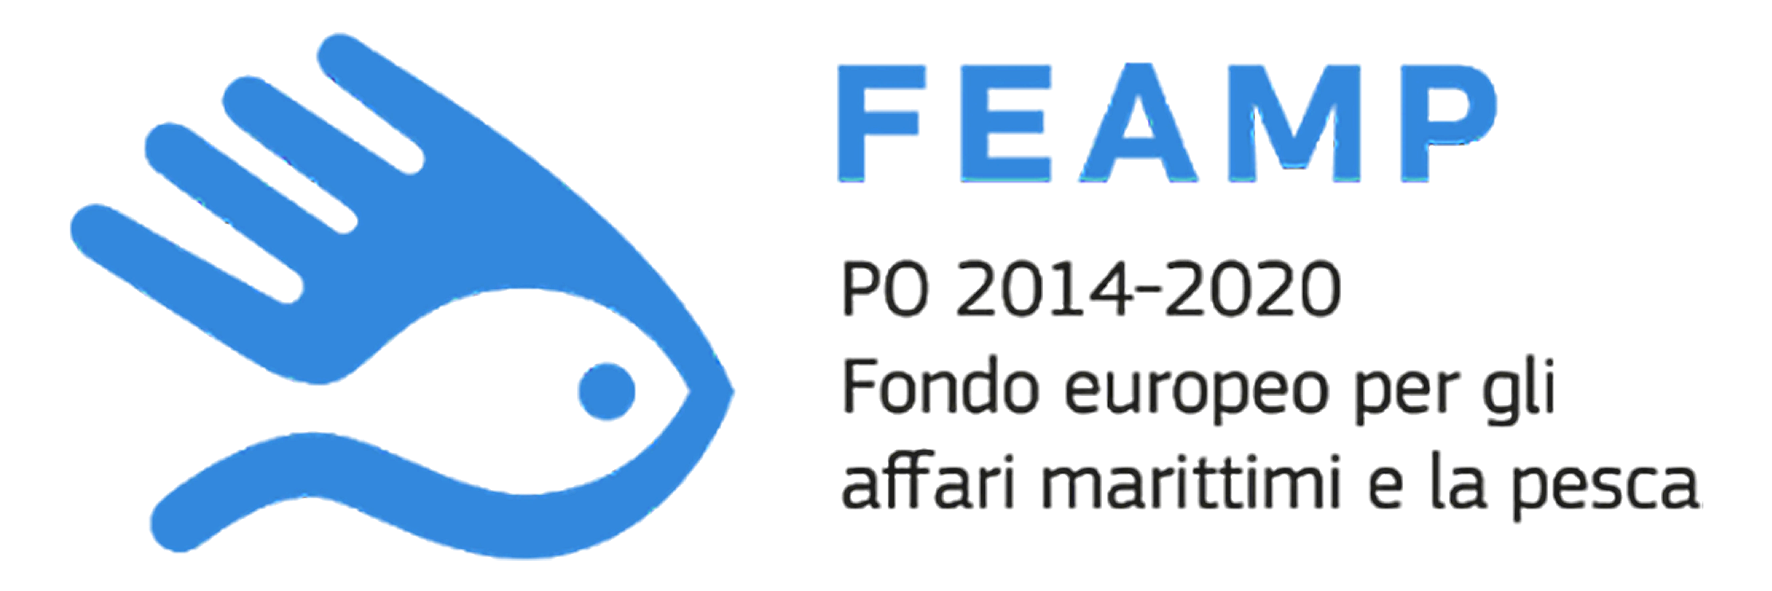 logo Feamp